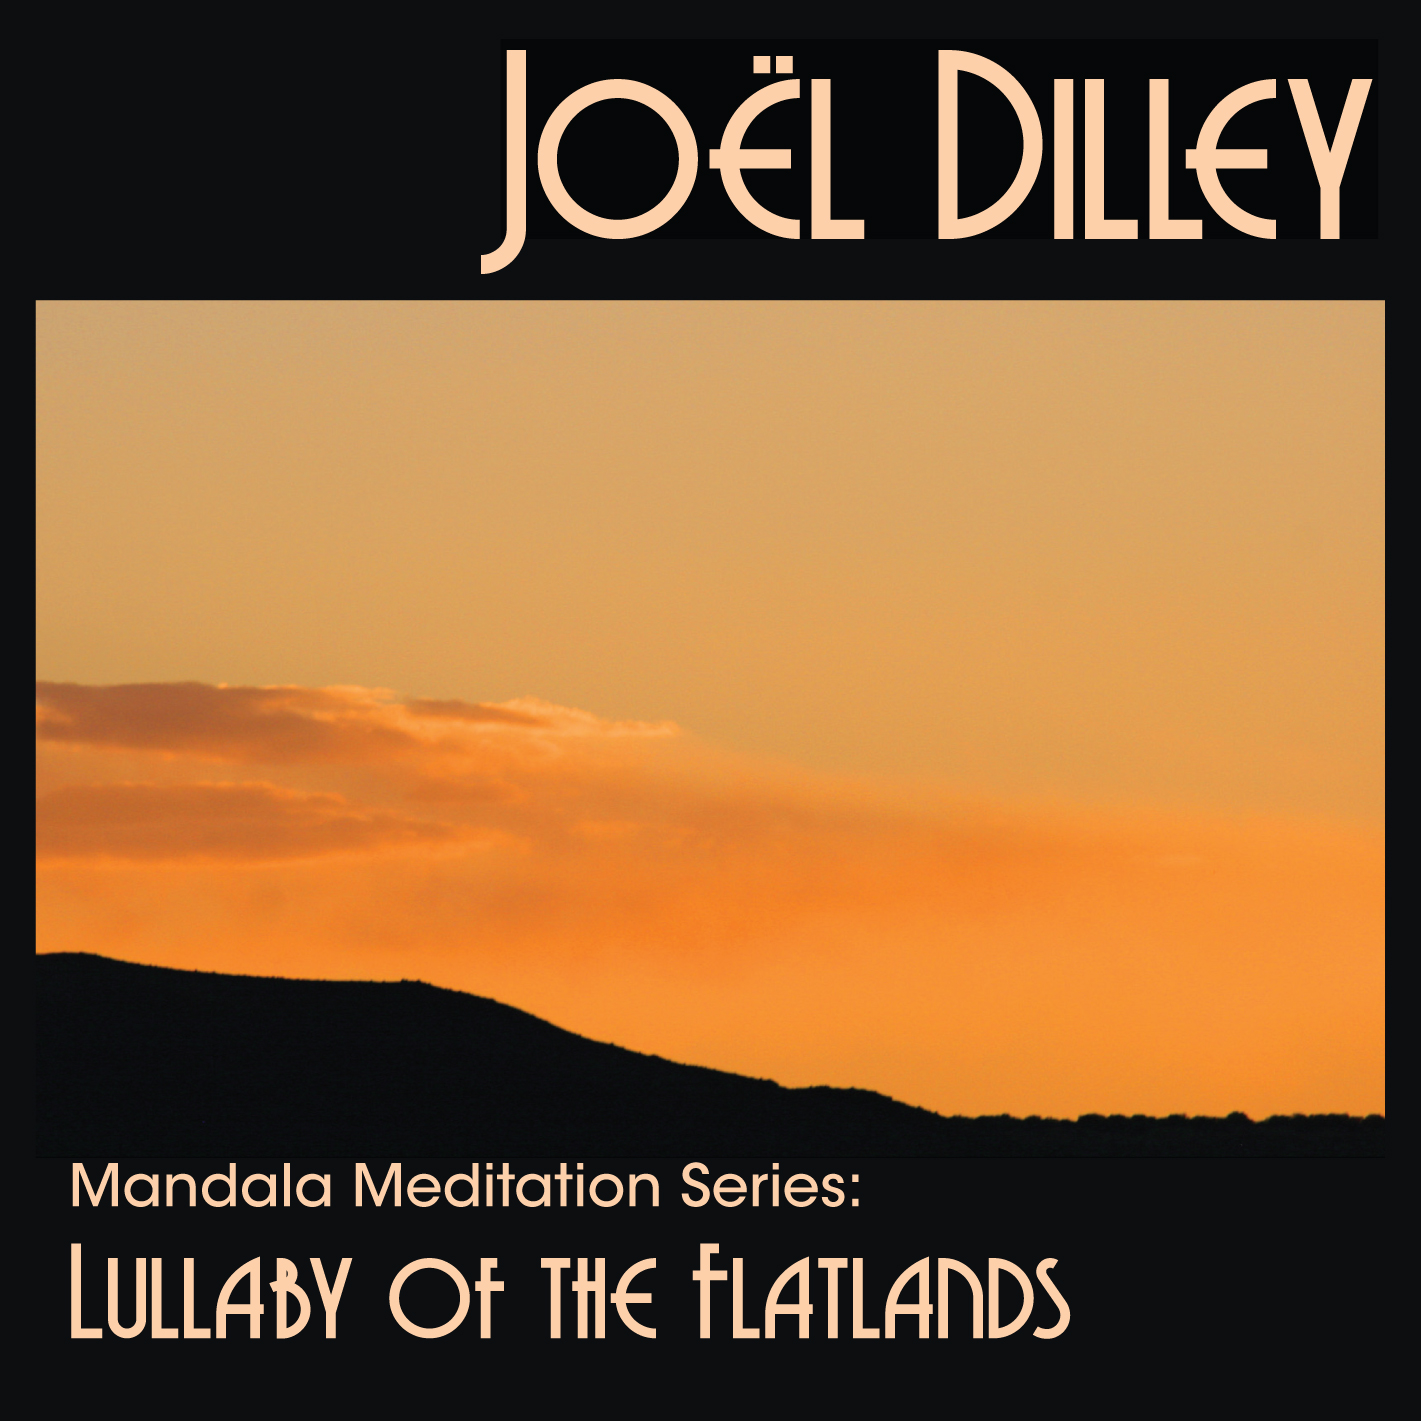 Mandala Meditation Series: Lullaby of the Flatlands